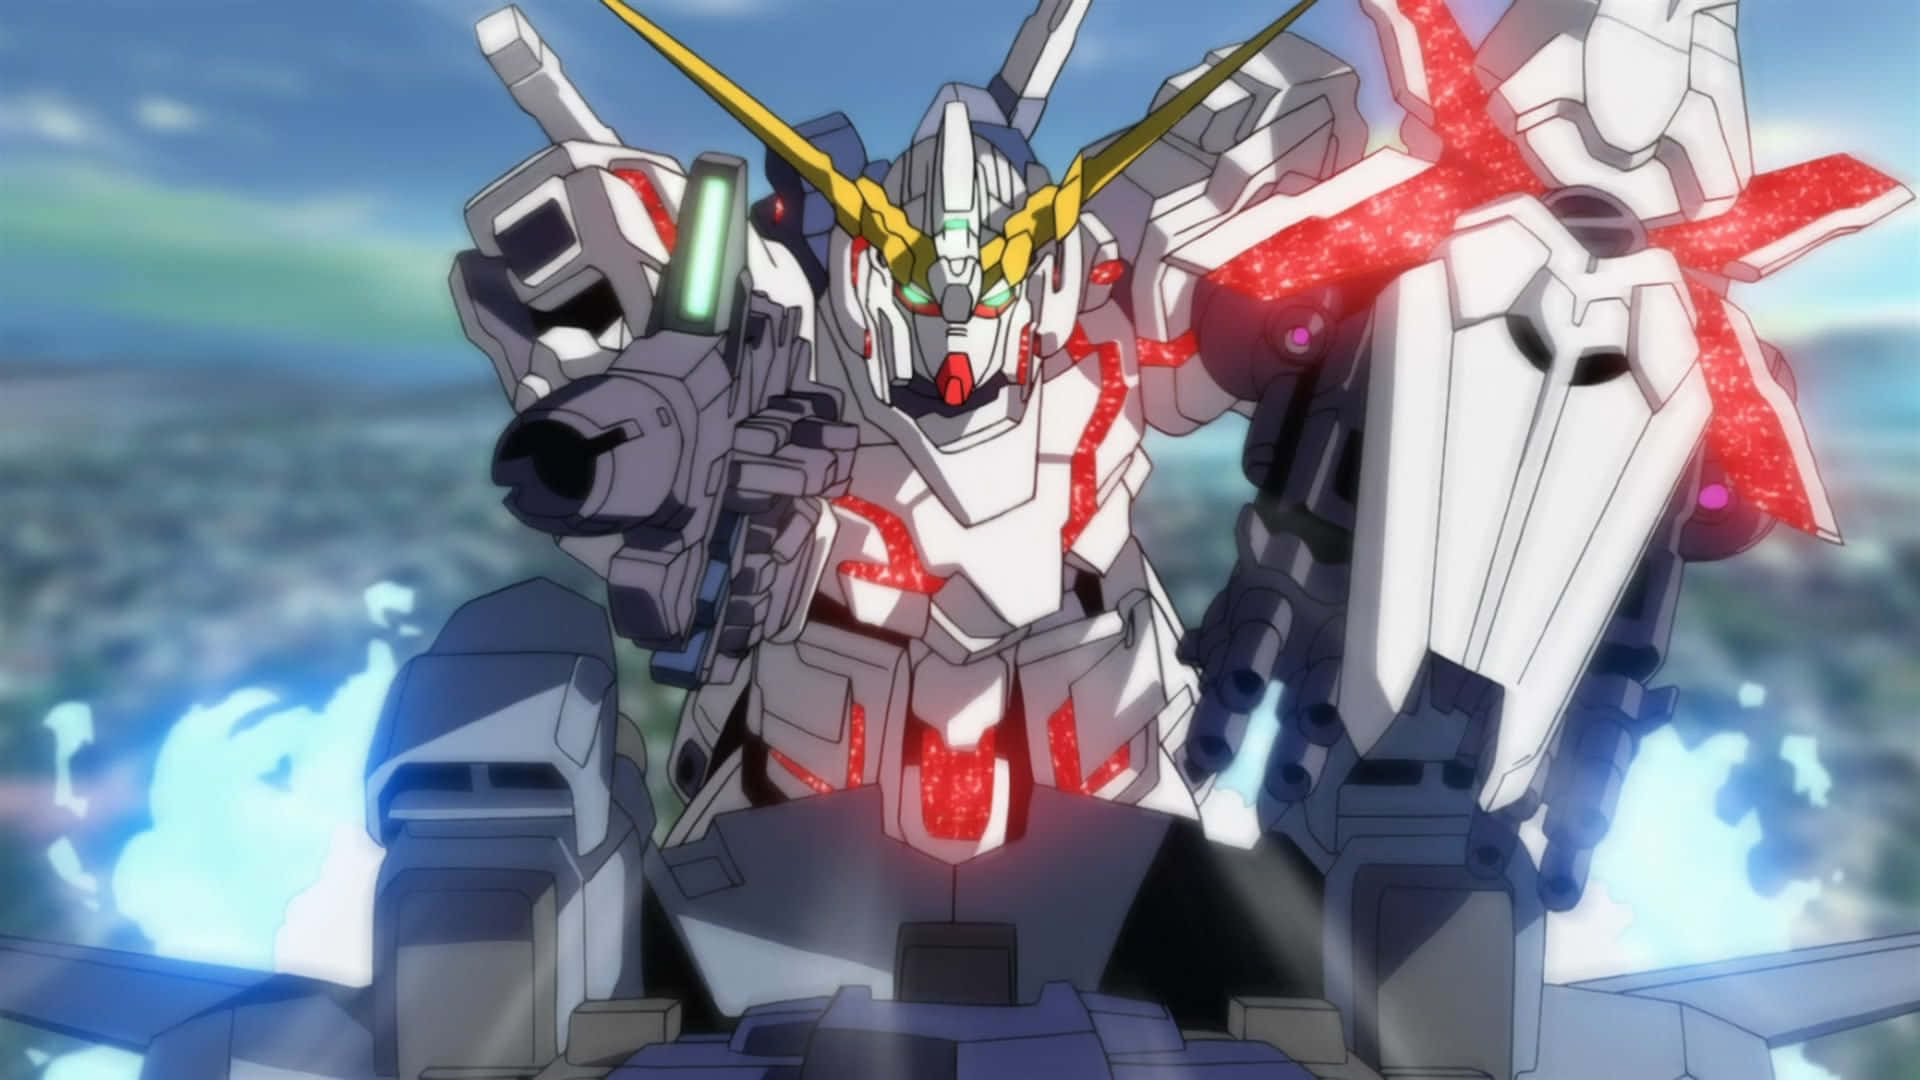 The Iconic RX-0 Unicorn Gundam Wallpaper